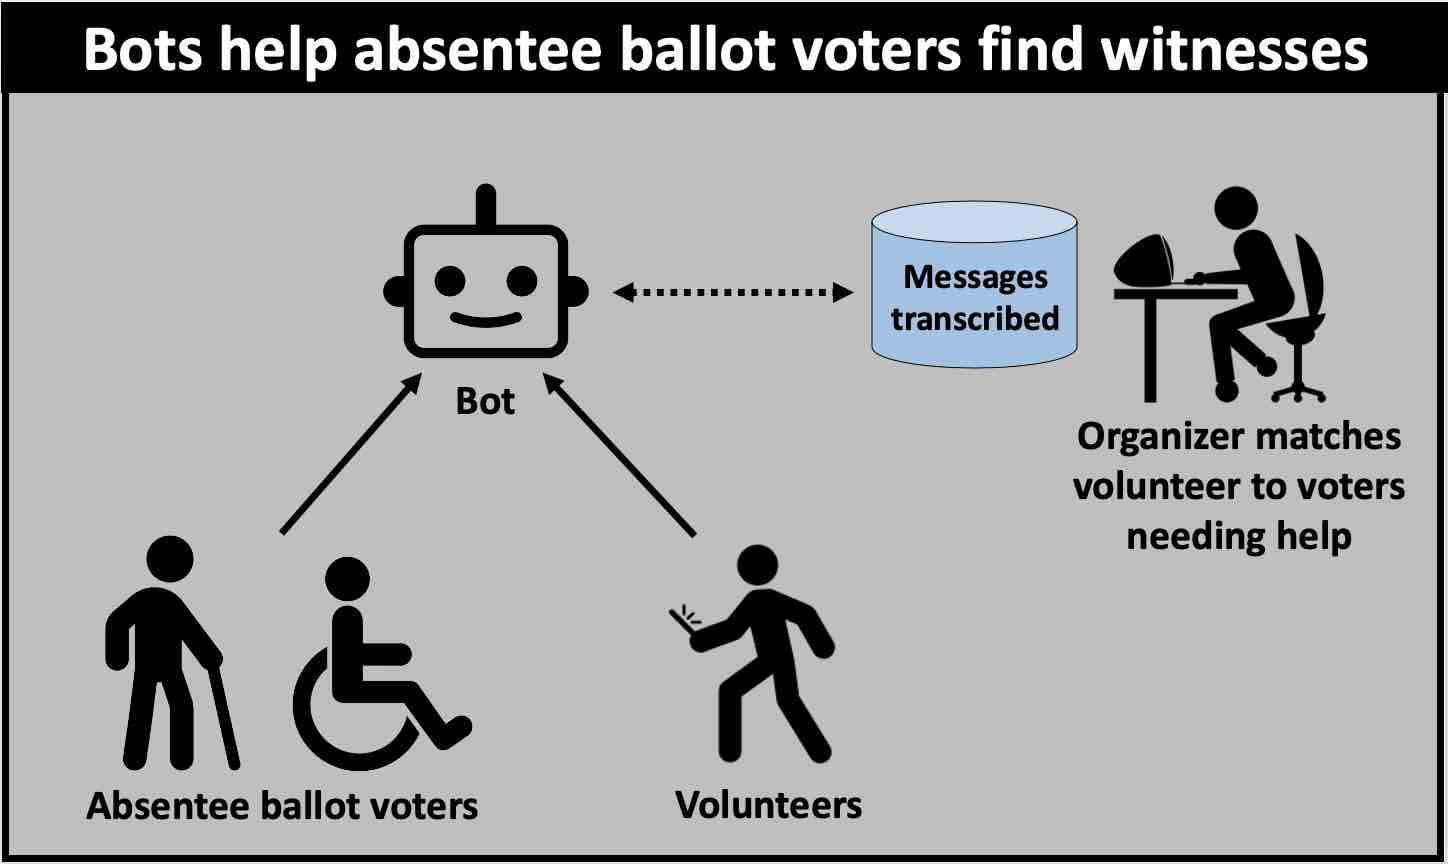 Bots help match absentee ballot voters with volunteer witnesses